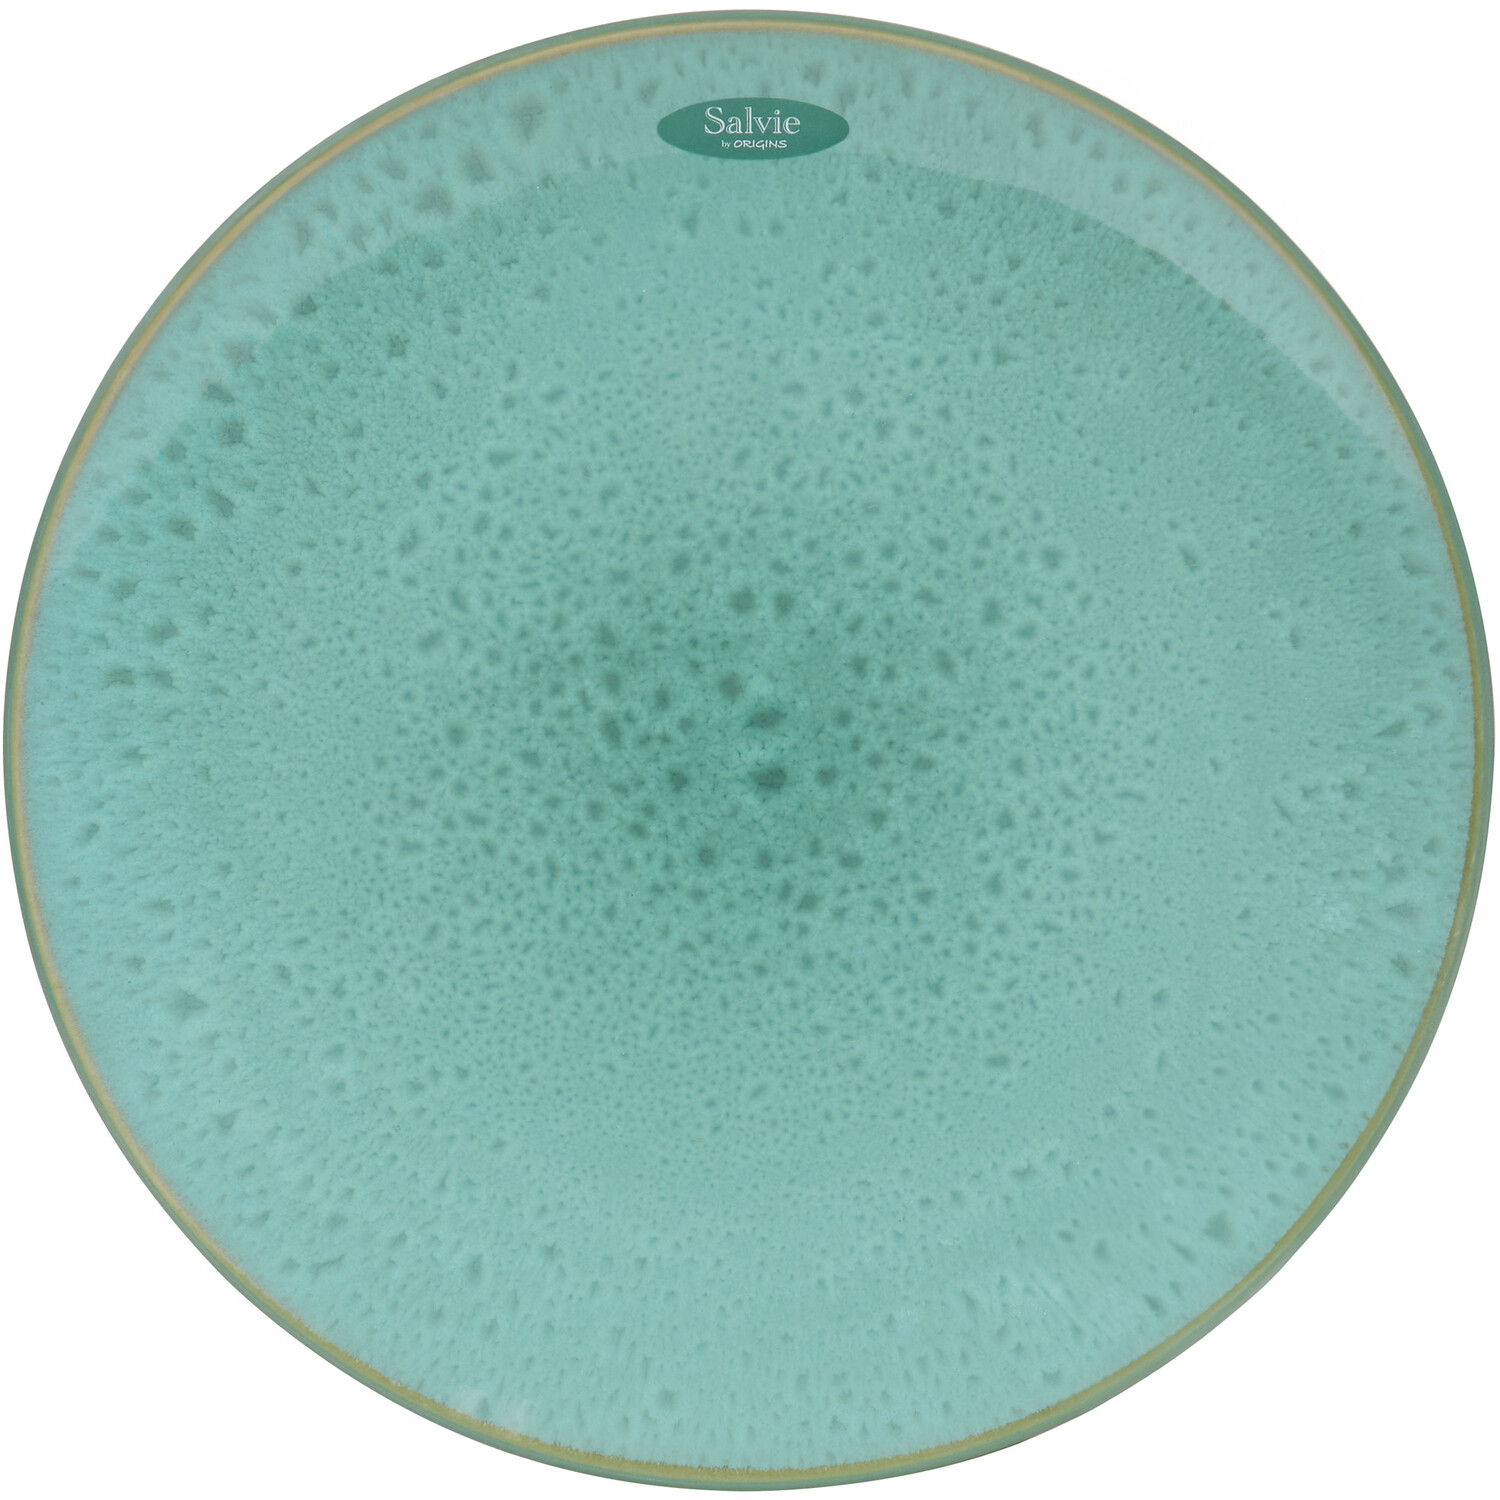 Salvie Reactive Glaze Plate - Sea Green / Dinner Plate Image 1